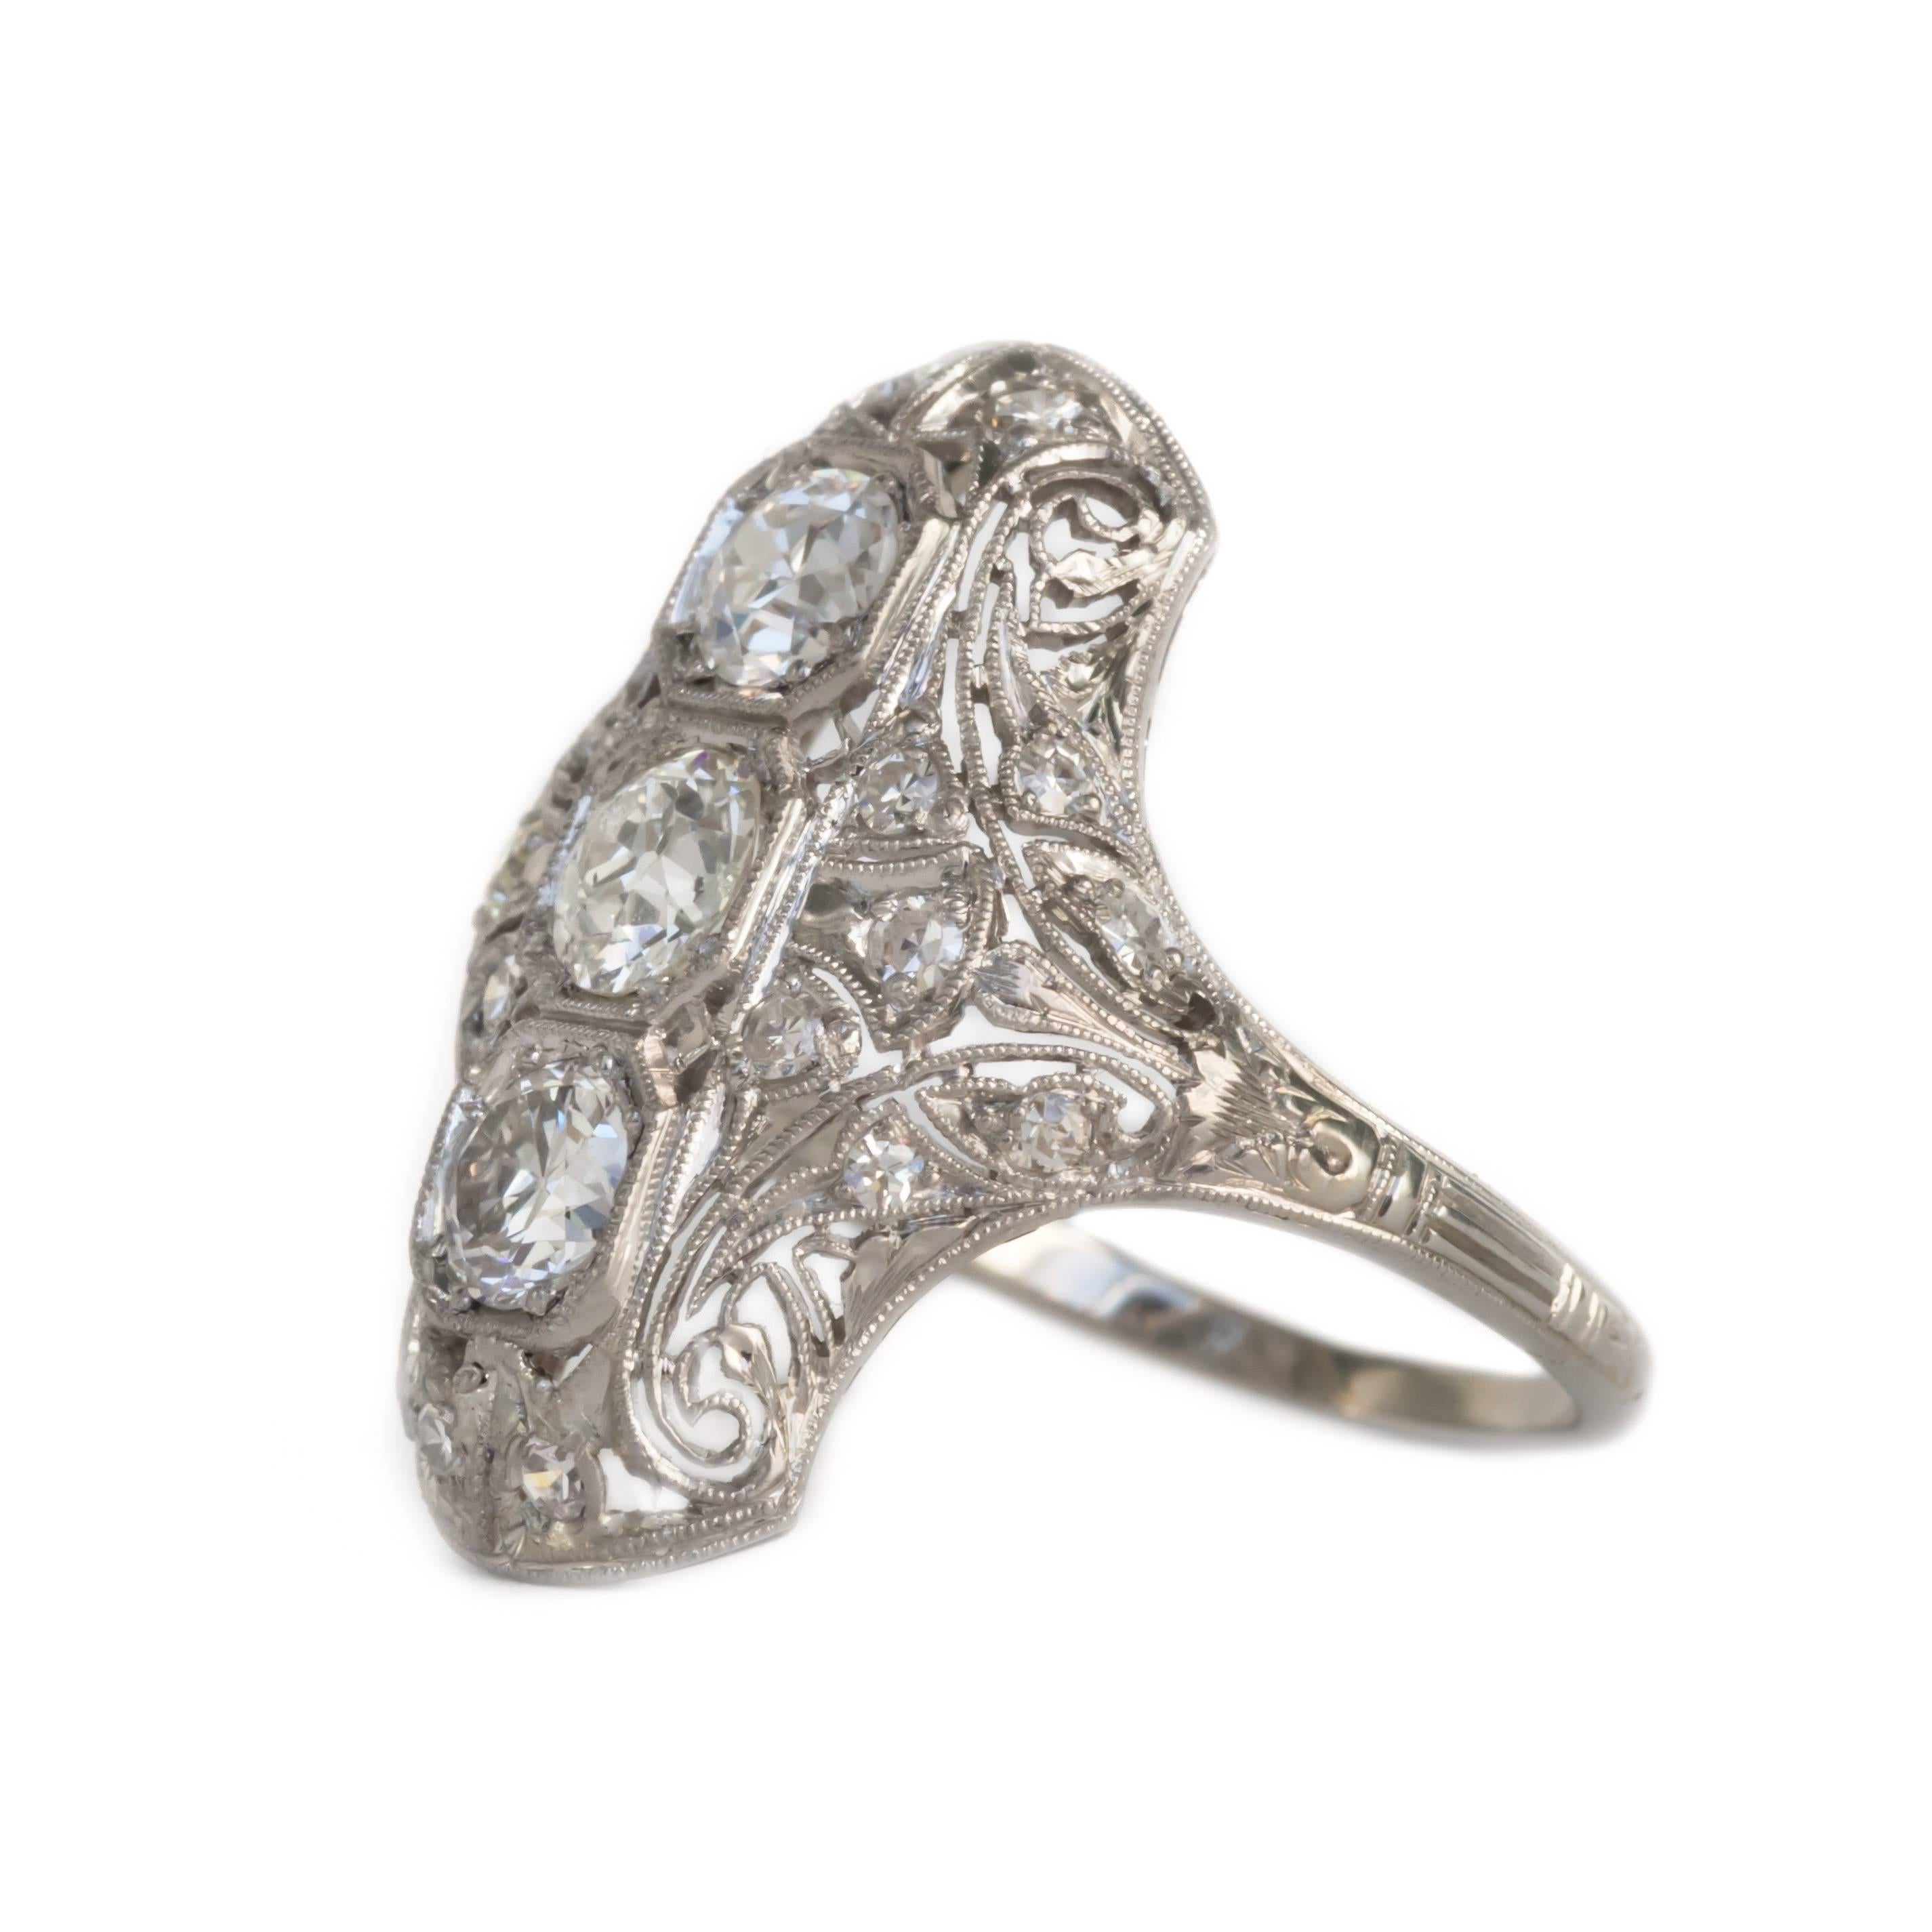 1920s Art Deco 2.00 Carat Old European Diamond Platinum Shield Ring

Item Details: 
Ring Size: 7
Metal Type: Platinum
Weight: 5.4 grams

Diamond Details:
Shape: Old European Brilliant
Carat Weight: 2.00 carat total weight
Color: G-J
Clarity: